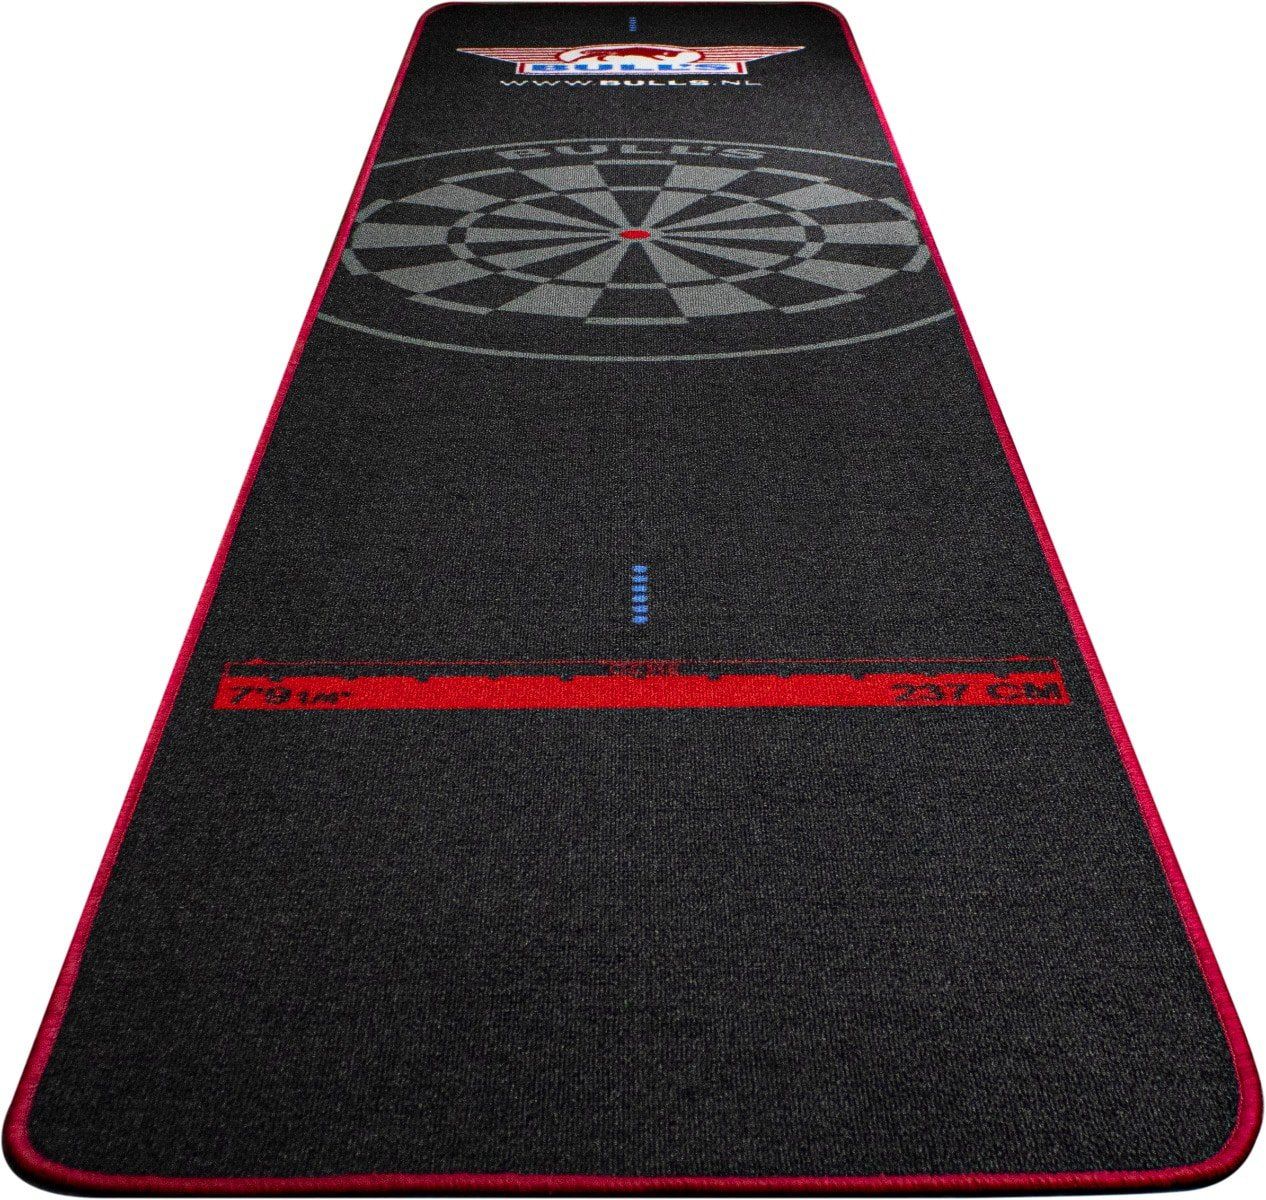 BullsNL Carpet/Dartmatte Black Red 300x65